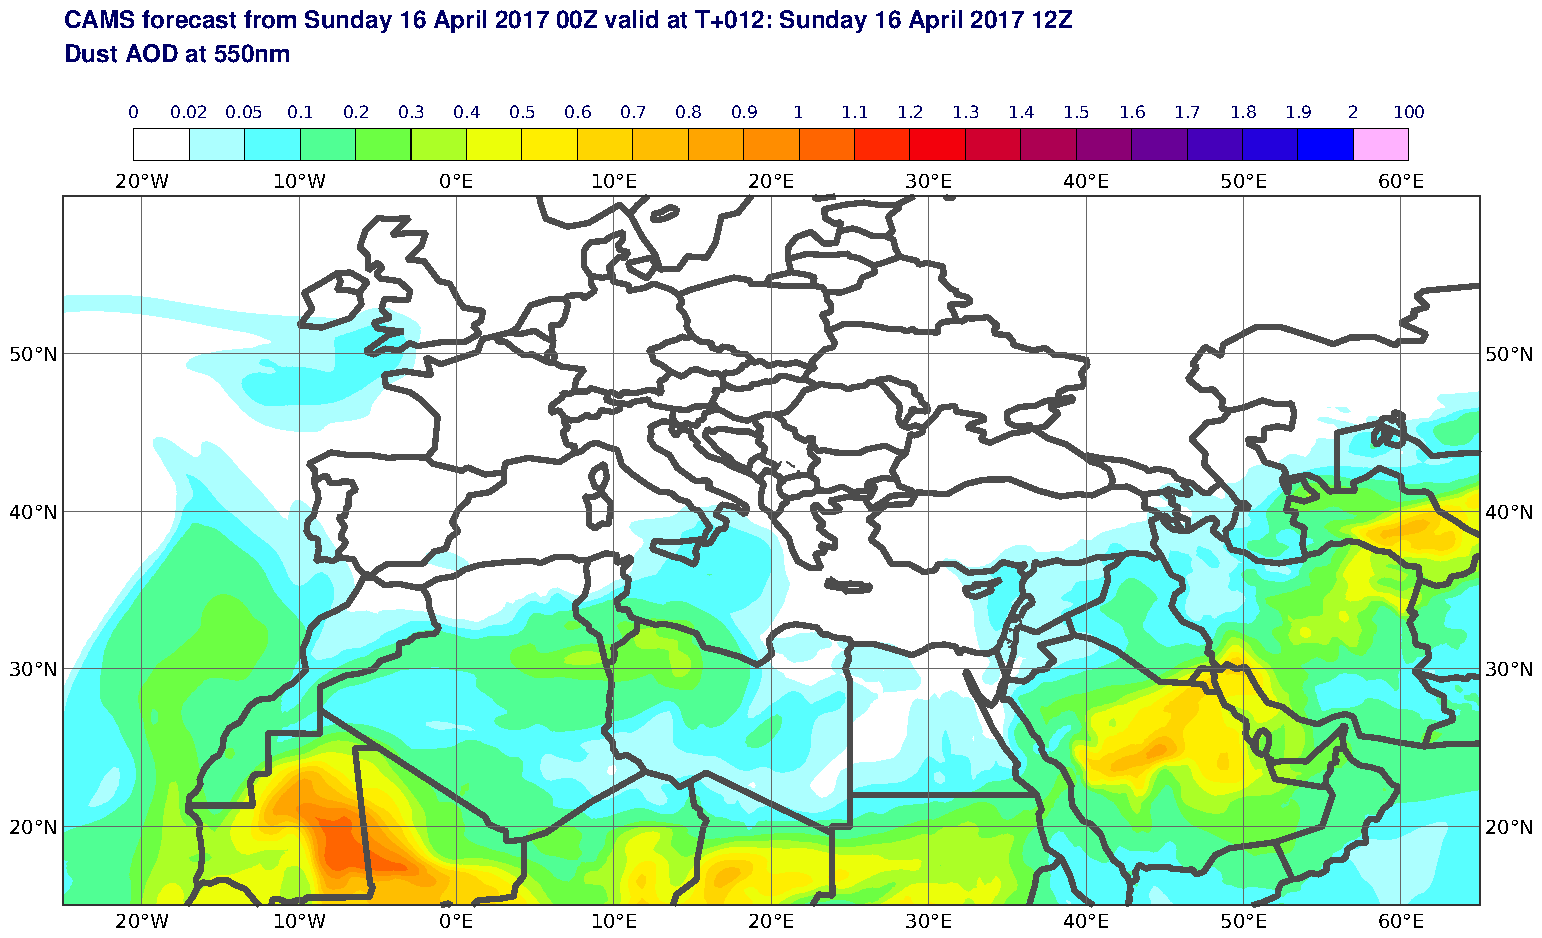 Dust AOD at 550nm valid at T12 - 2017-04-16 12:00